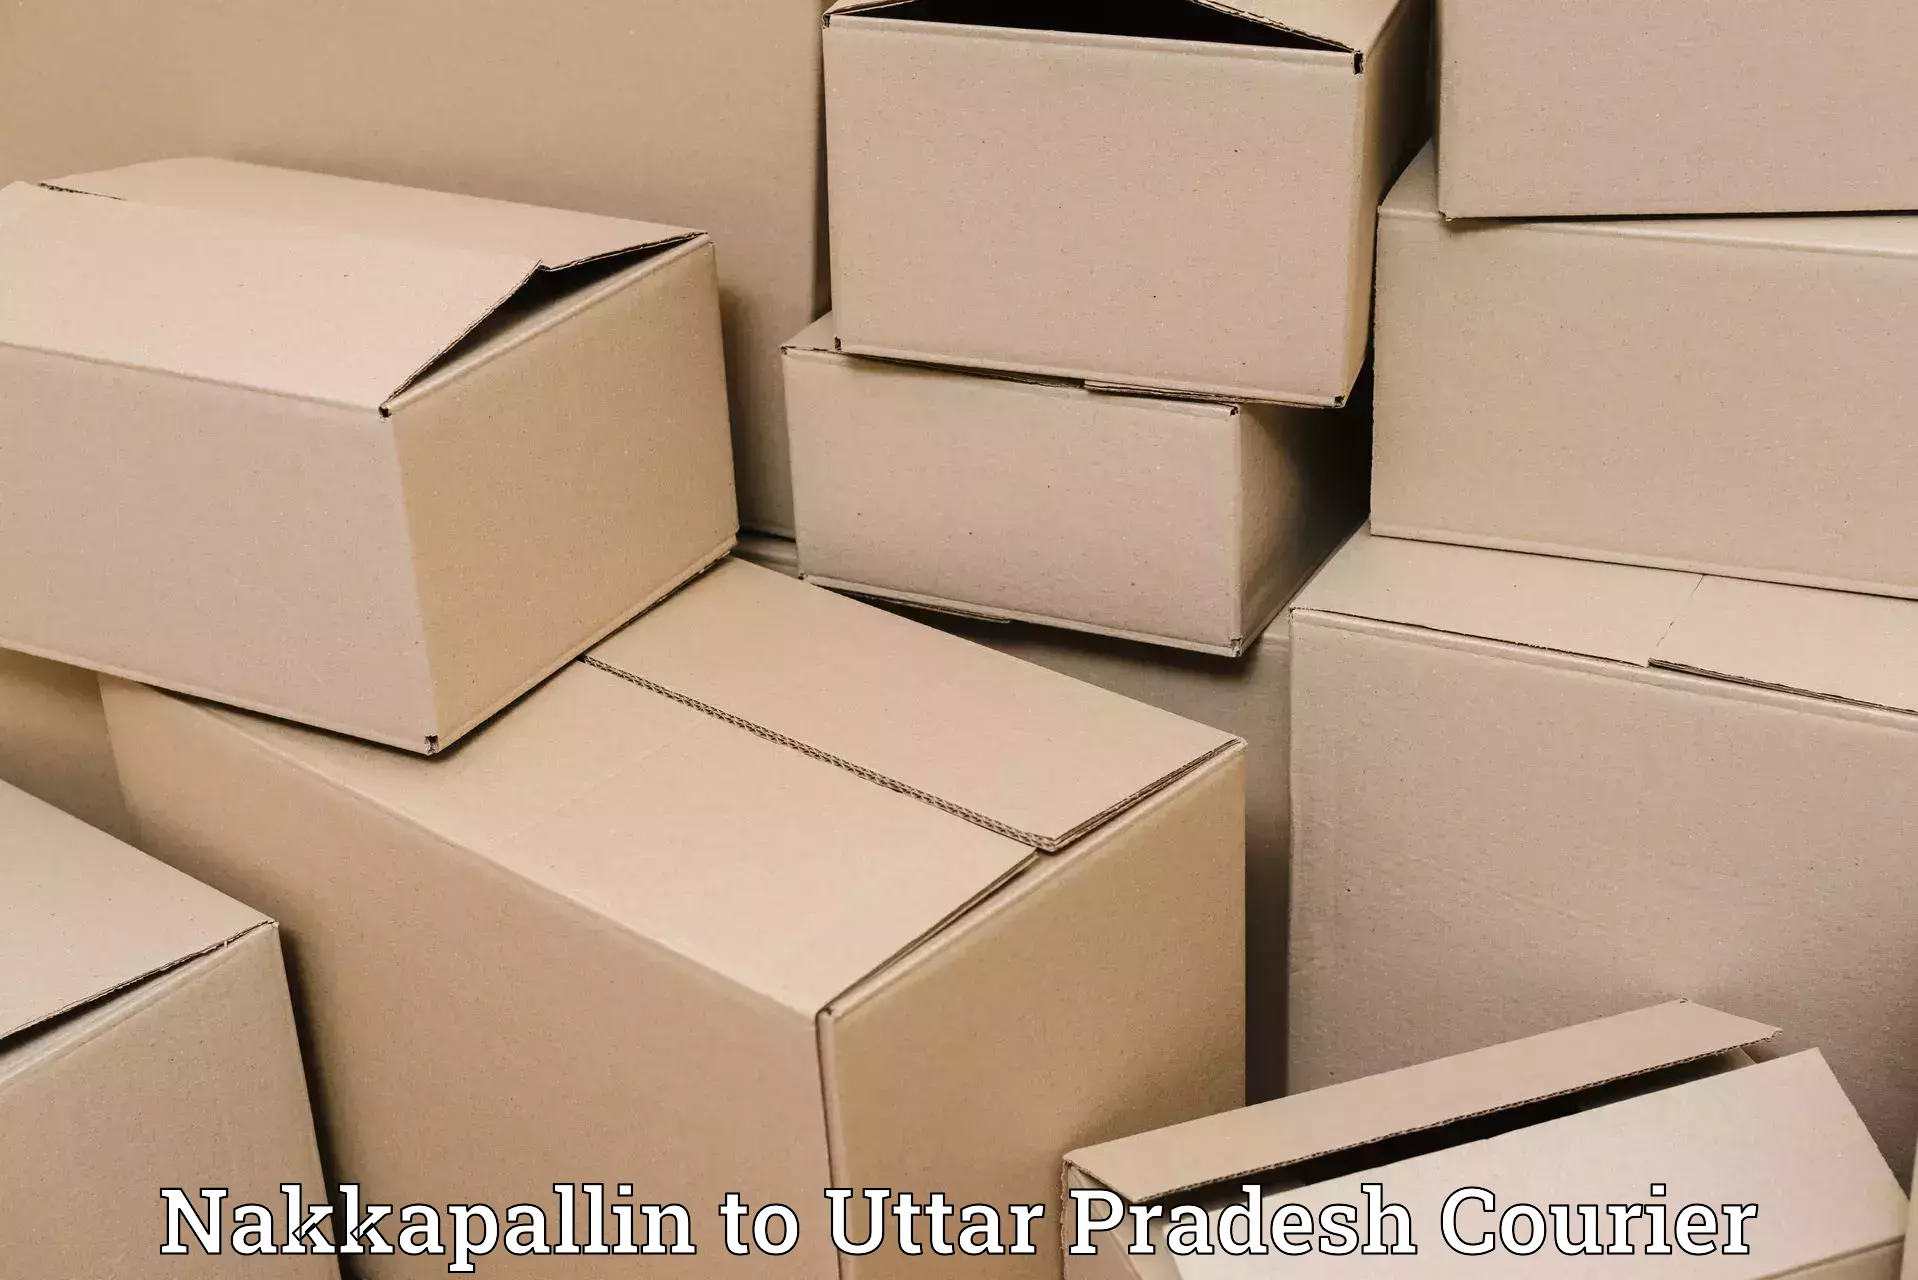 Streamlined delivery processes Nakkapallin to Khalilabad